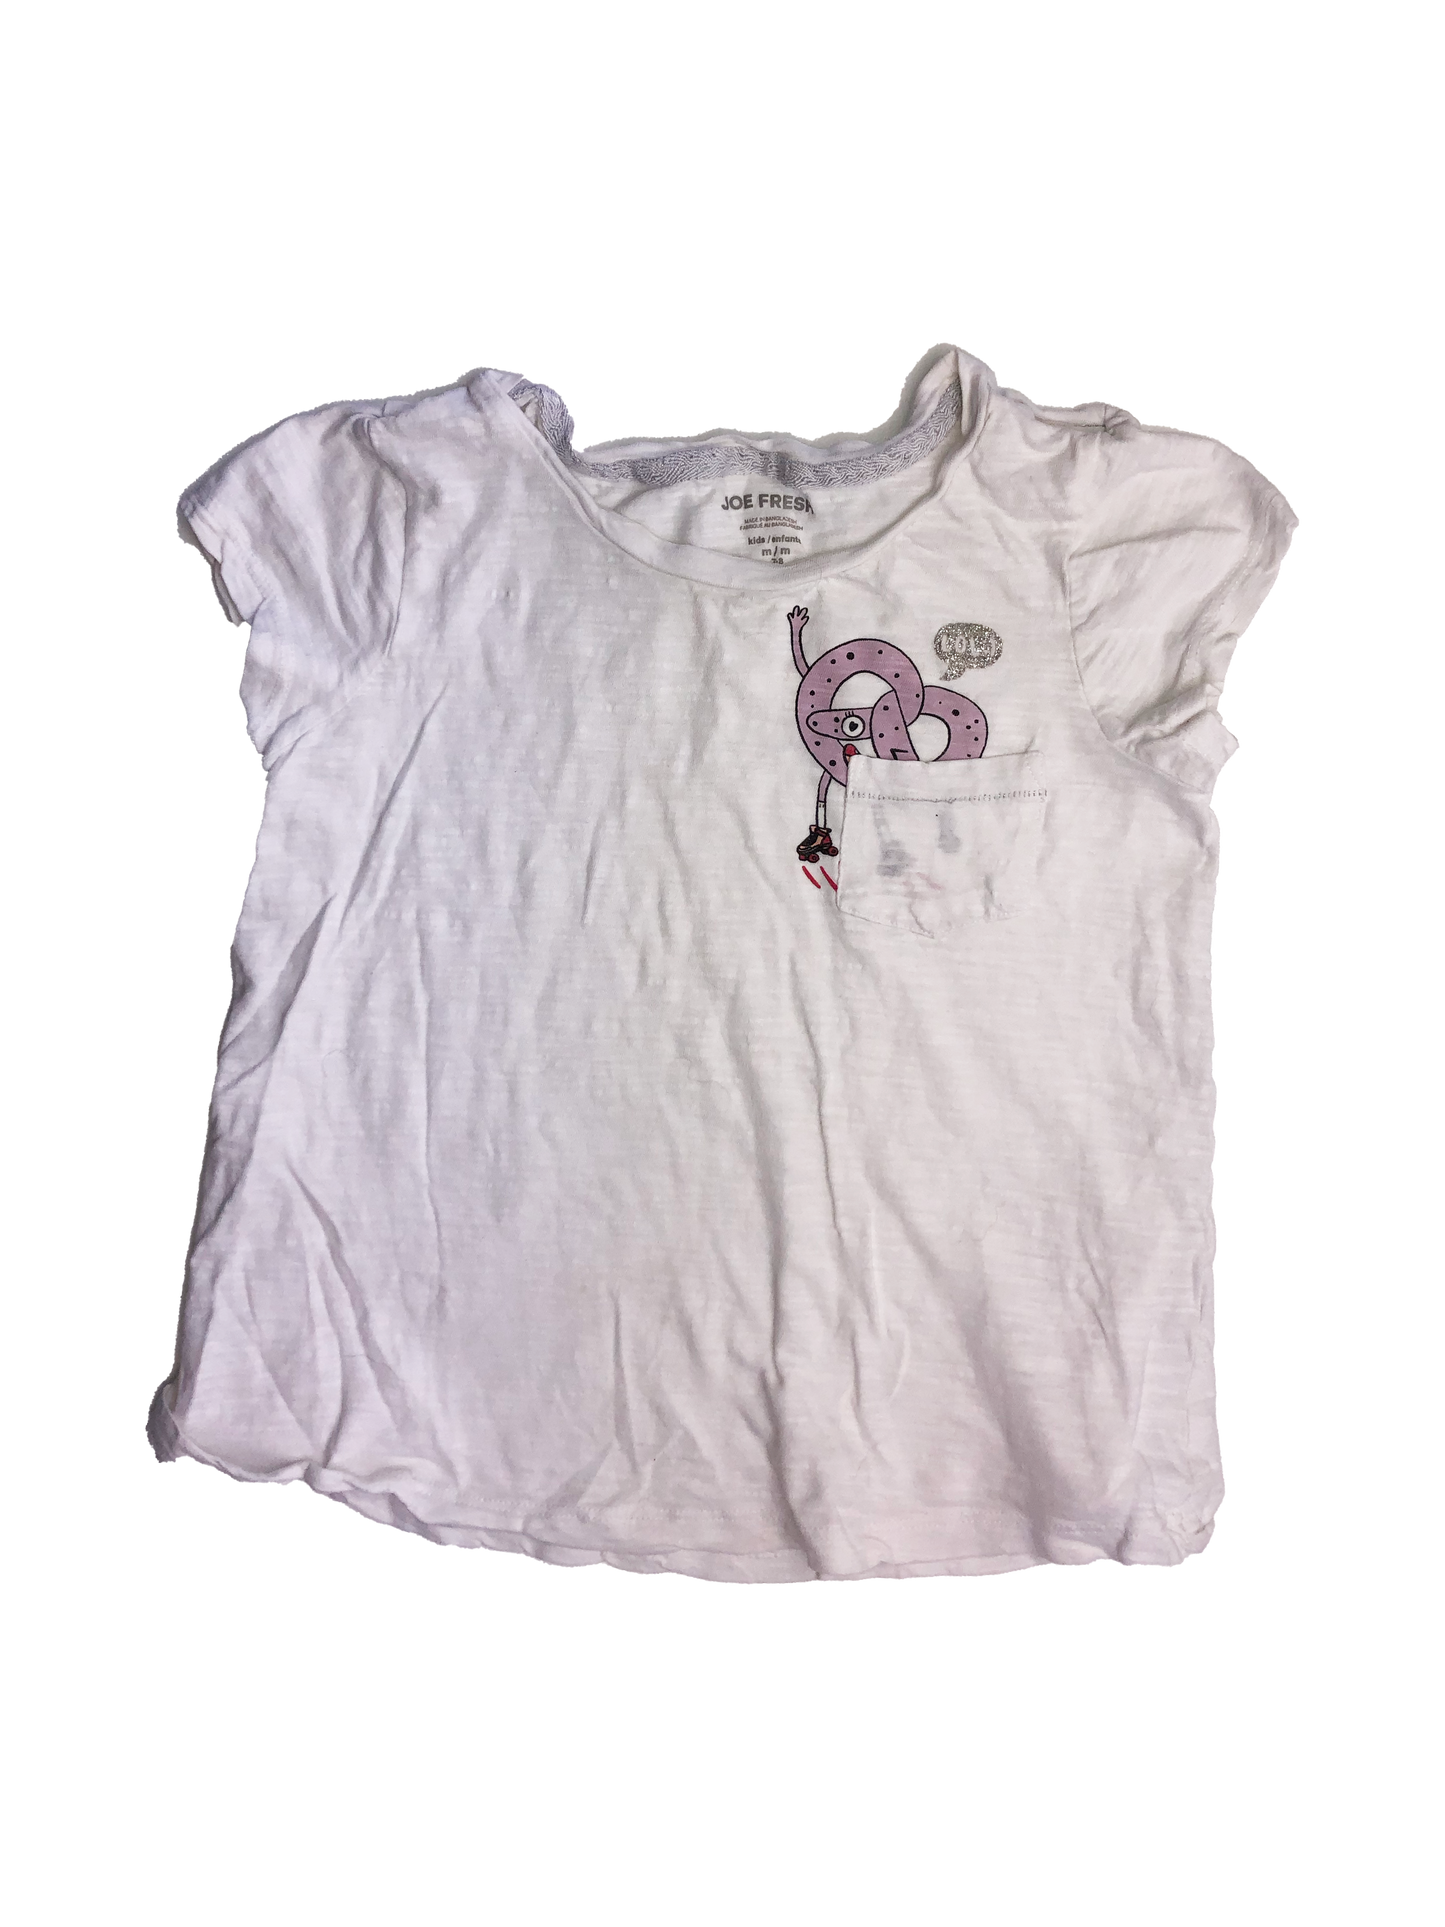 Joe Fresh White T-Shirt with Pretzel in a Pocket 7-8